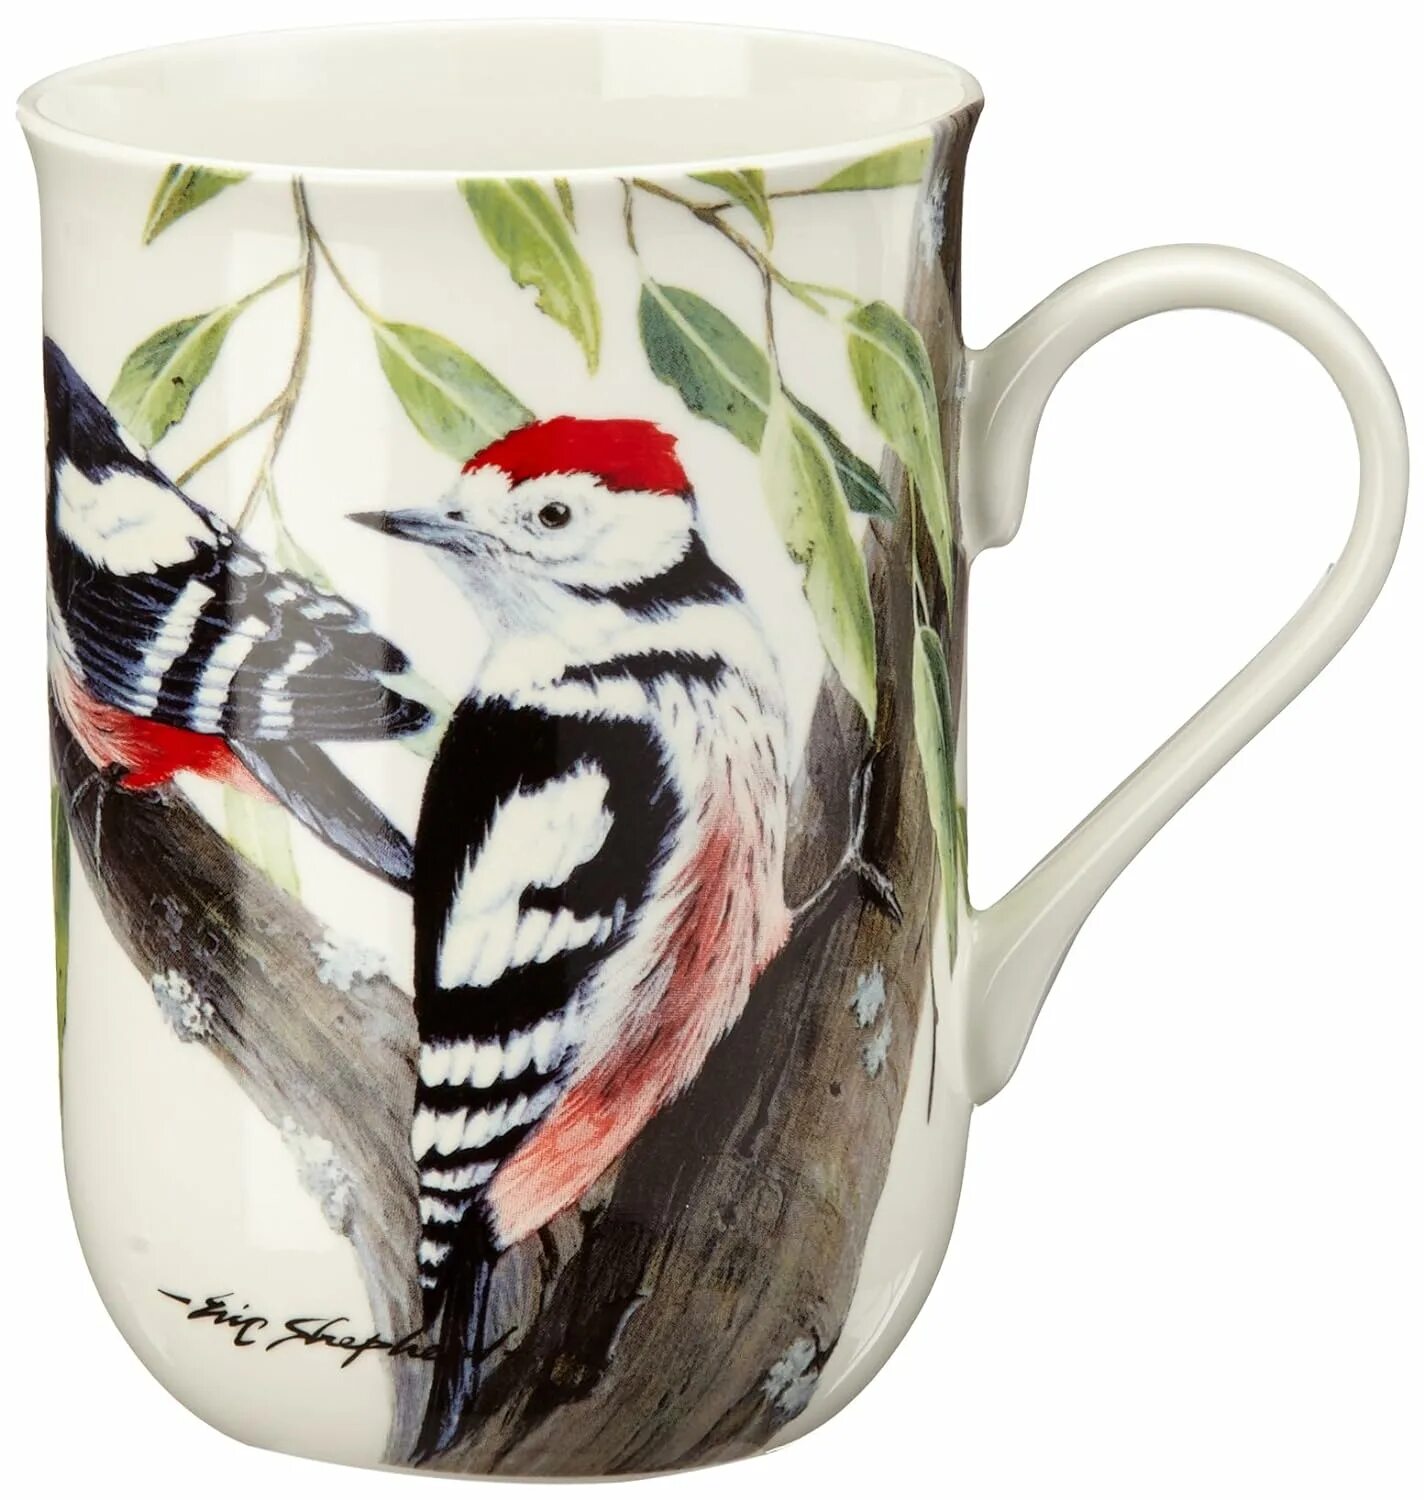 Maxwell Williams птицы. Чашка с птицами. Птичка и чайная чашка. Кружка птичка.